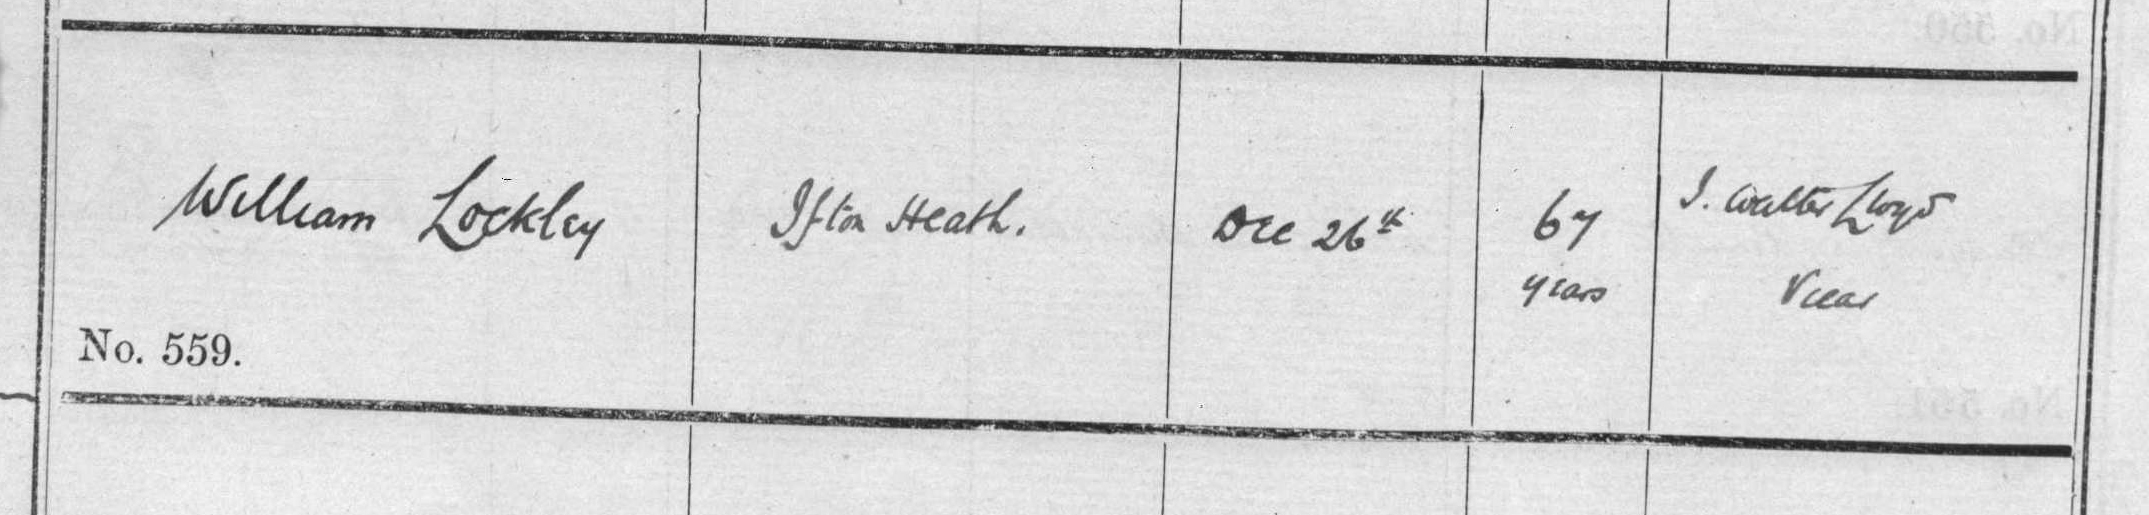 William Lockley's burial record at TheGenealogist